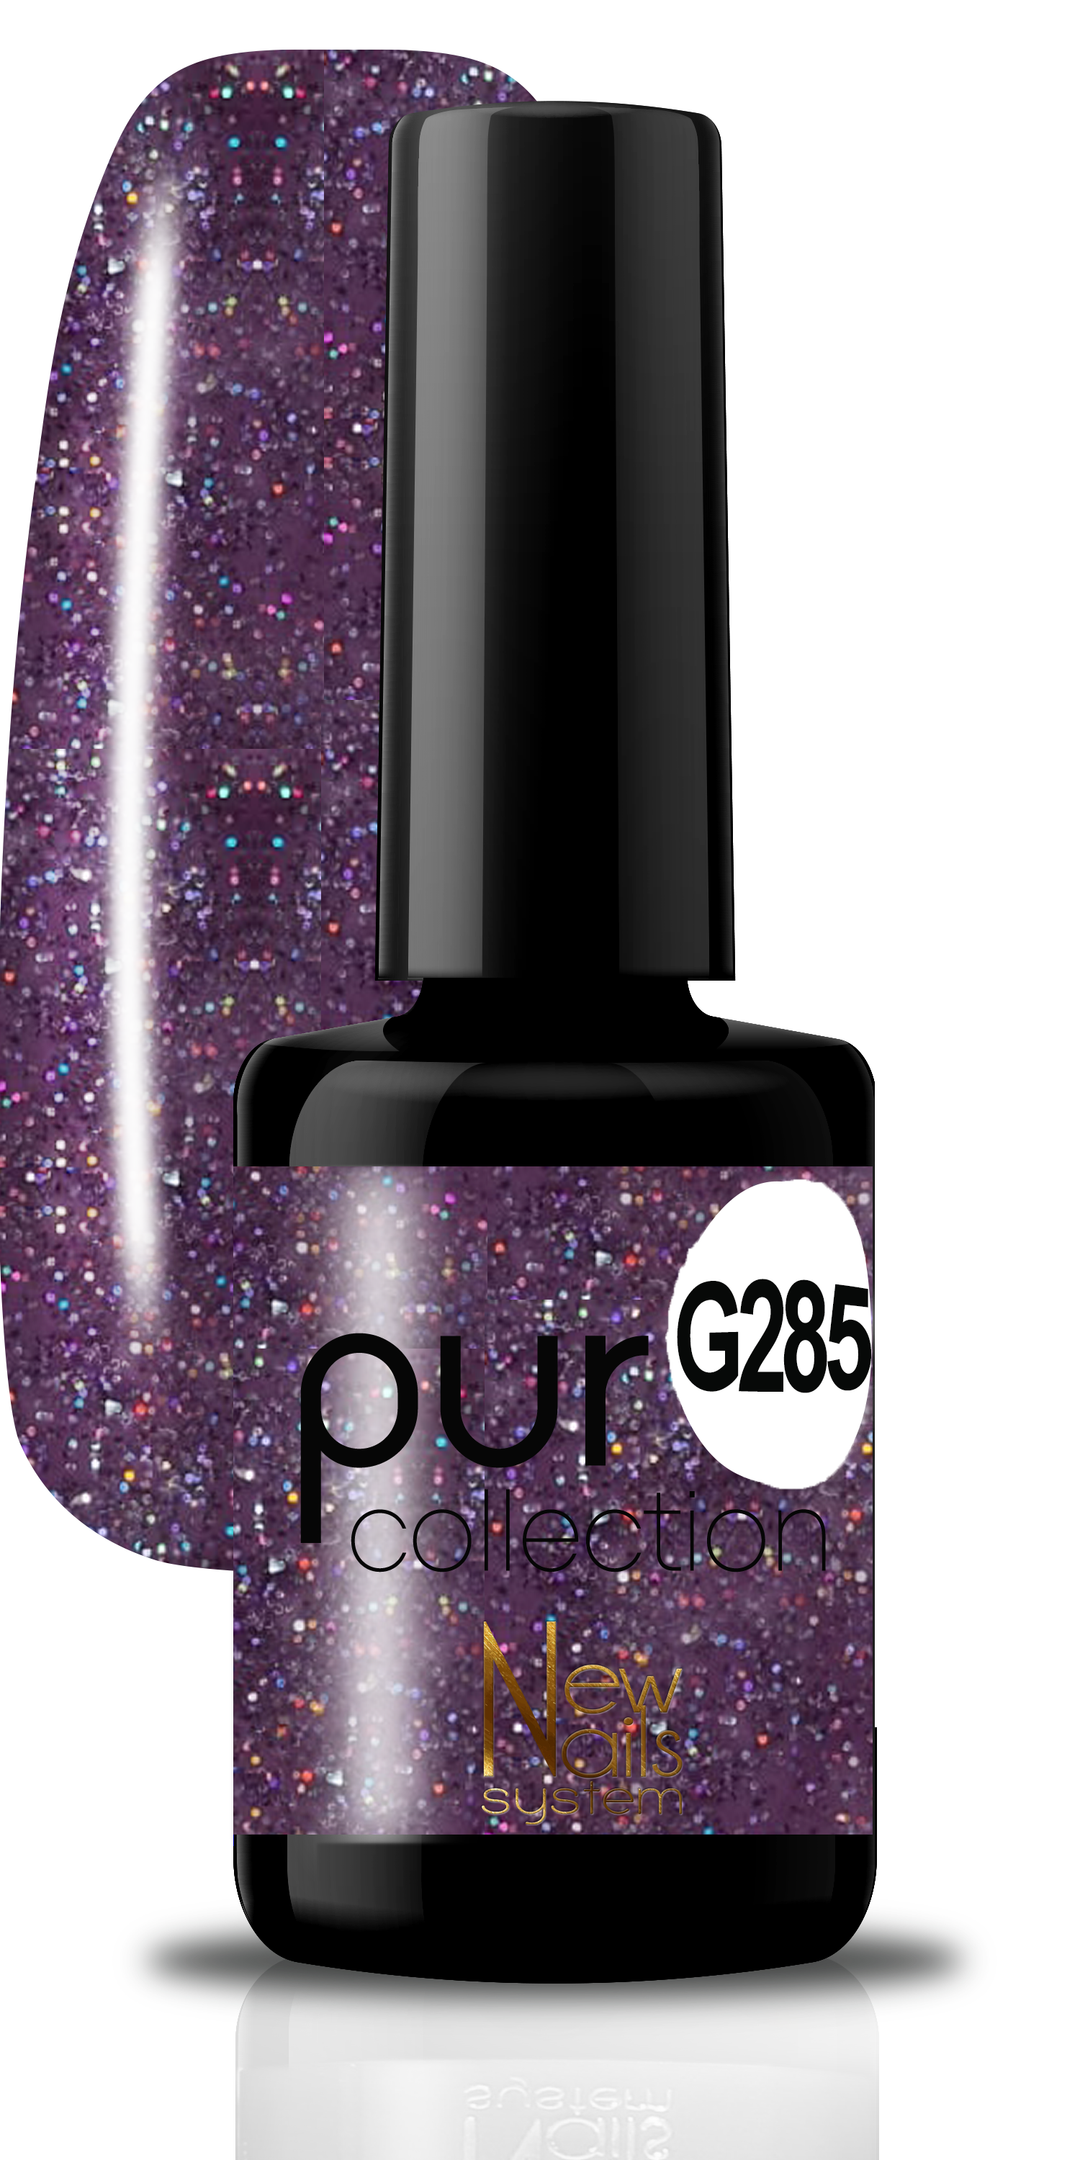 Puro collection G285 color gel polish 5ml